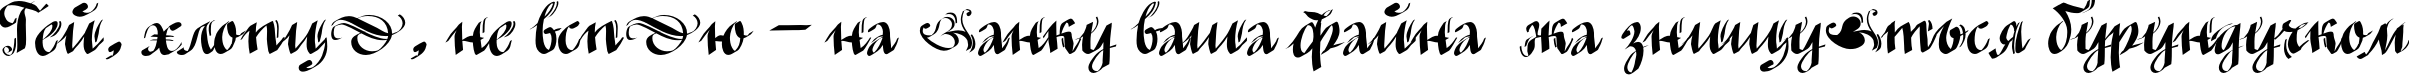 Пример написания шрифтом MinusmanC текста на украинском